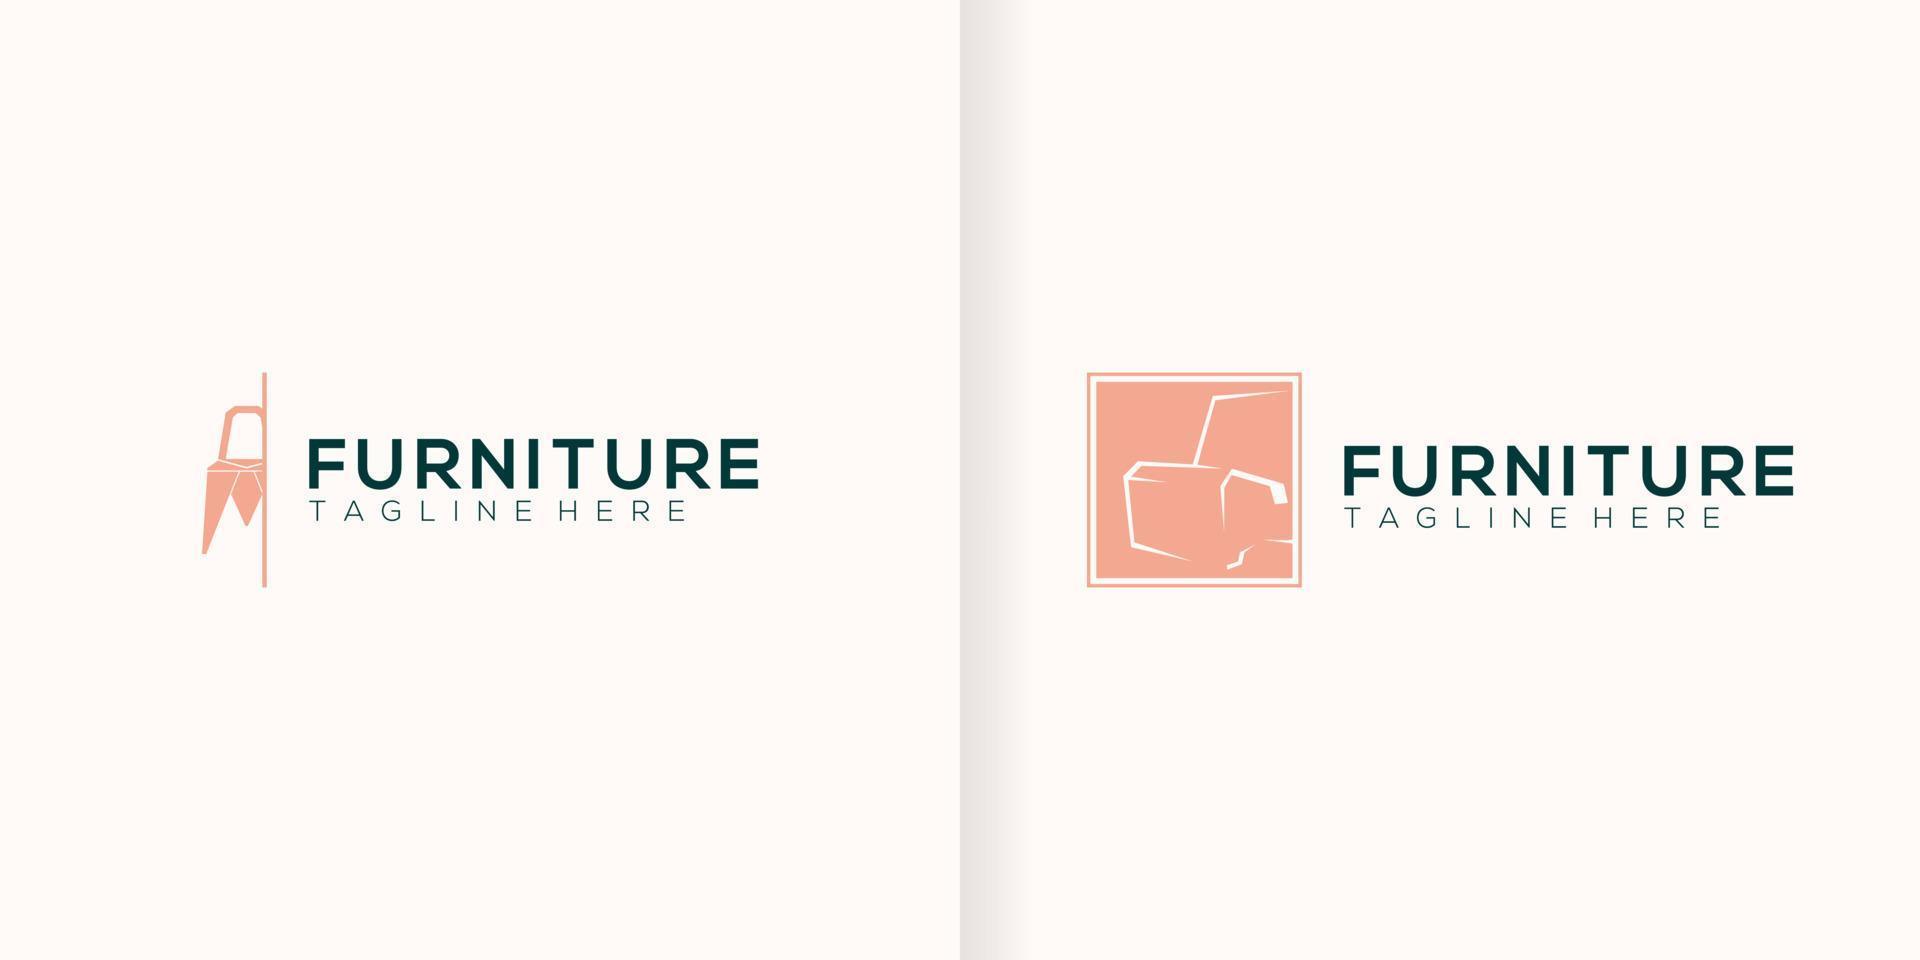 minimalist furniture logo design style vector